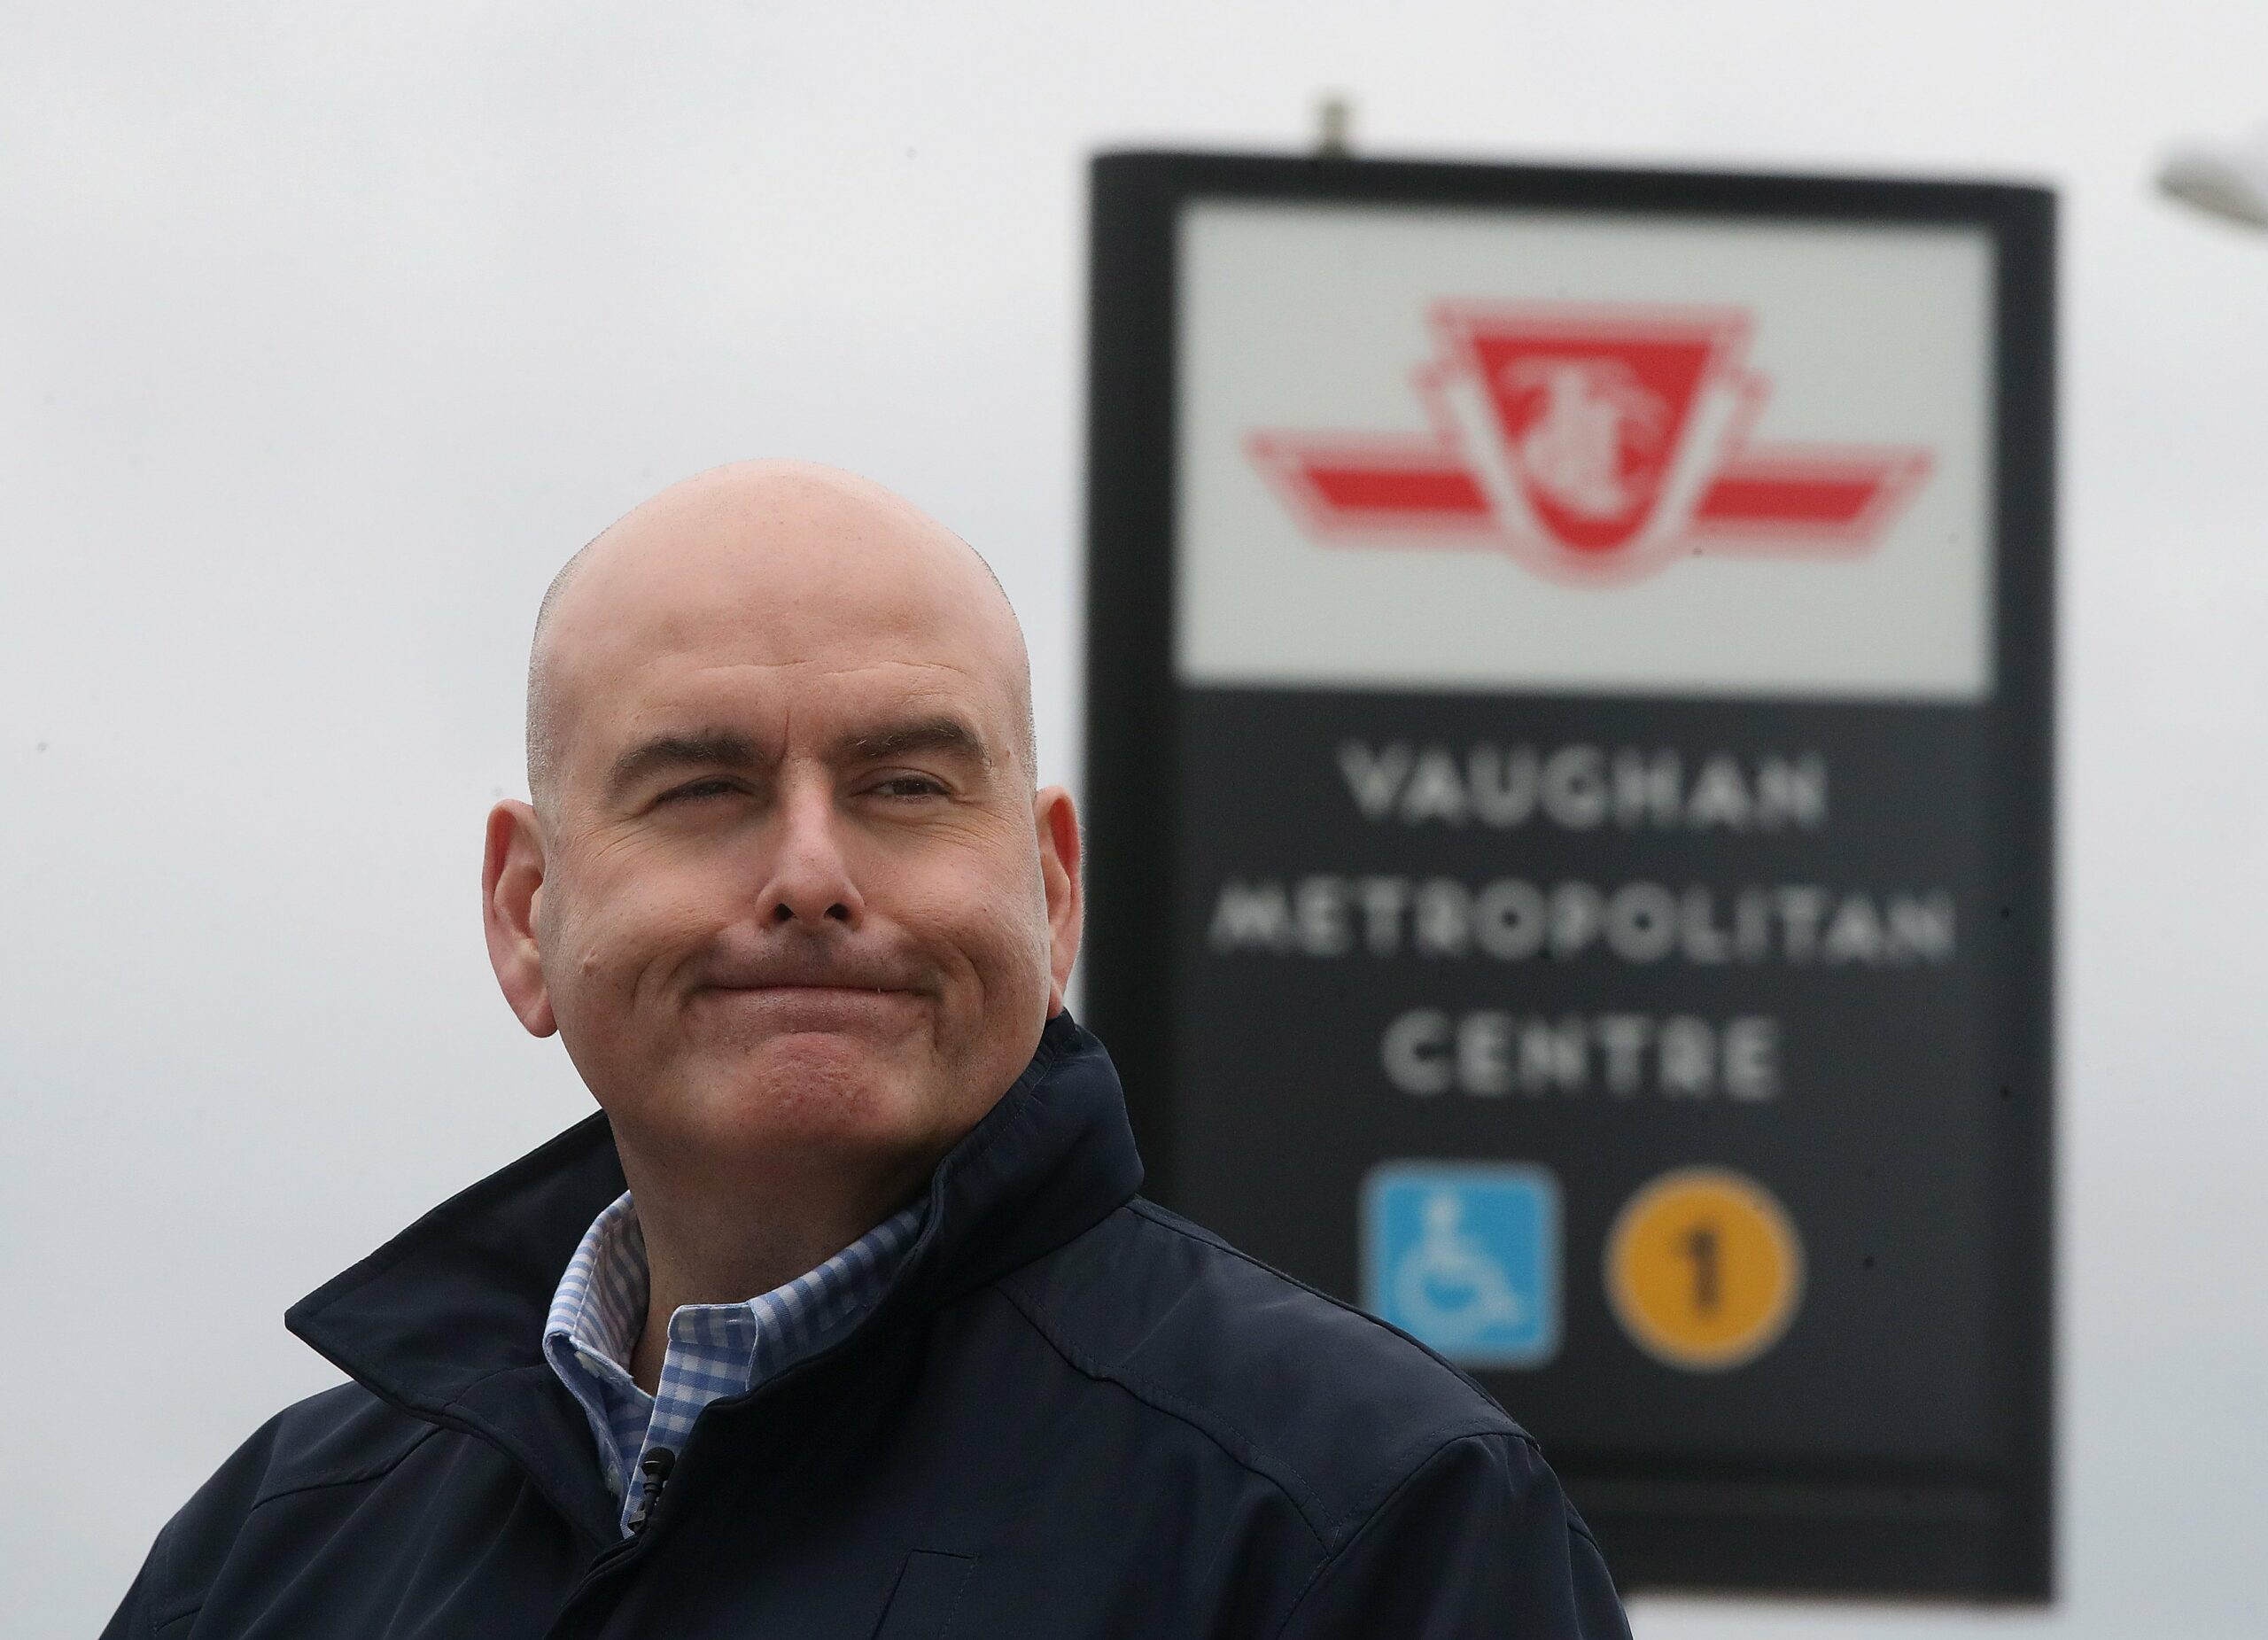 Del Duca would be frontrunner in Vaughan mayor race: poll